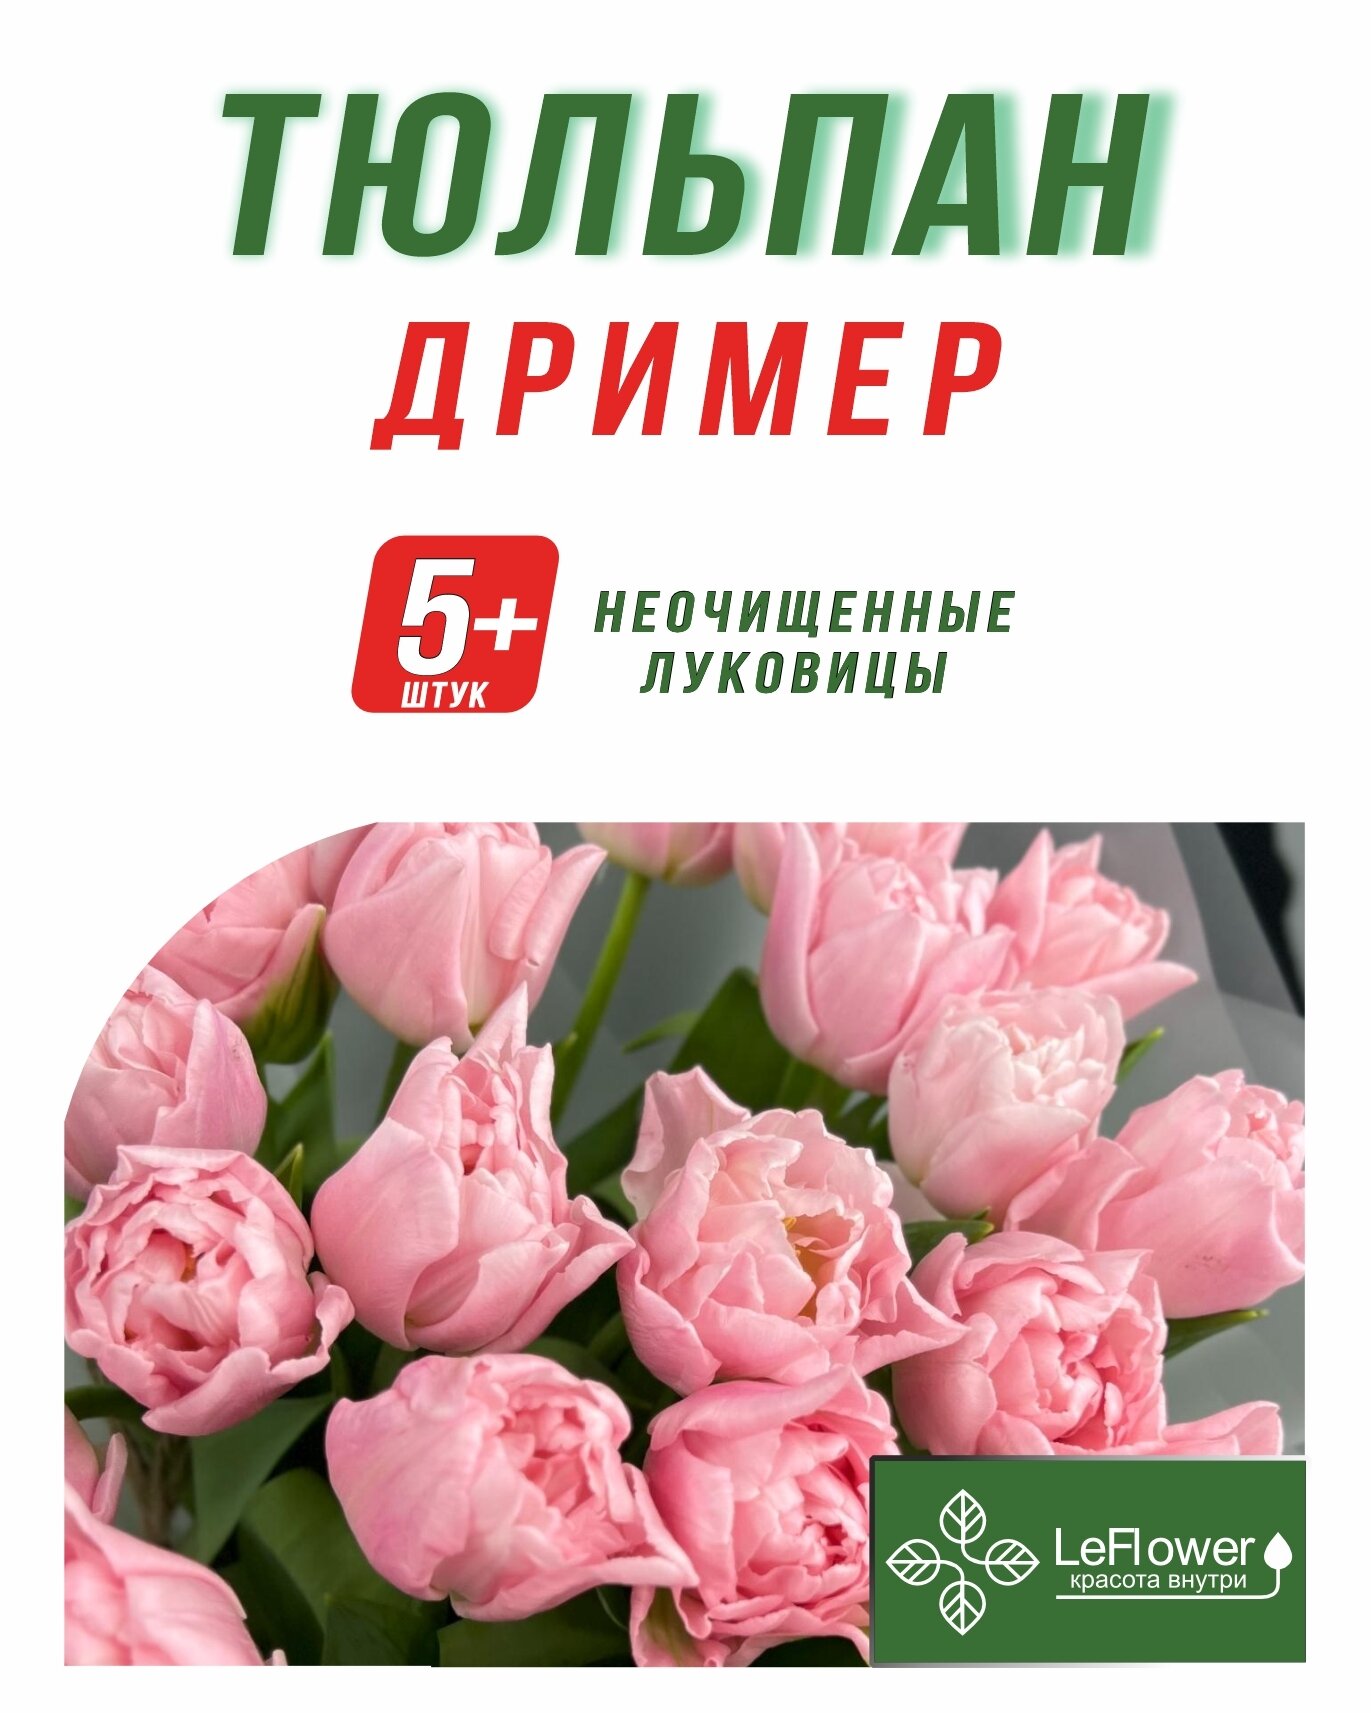 Тюльпан Луковица Дример 5+ шт